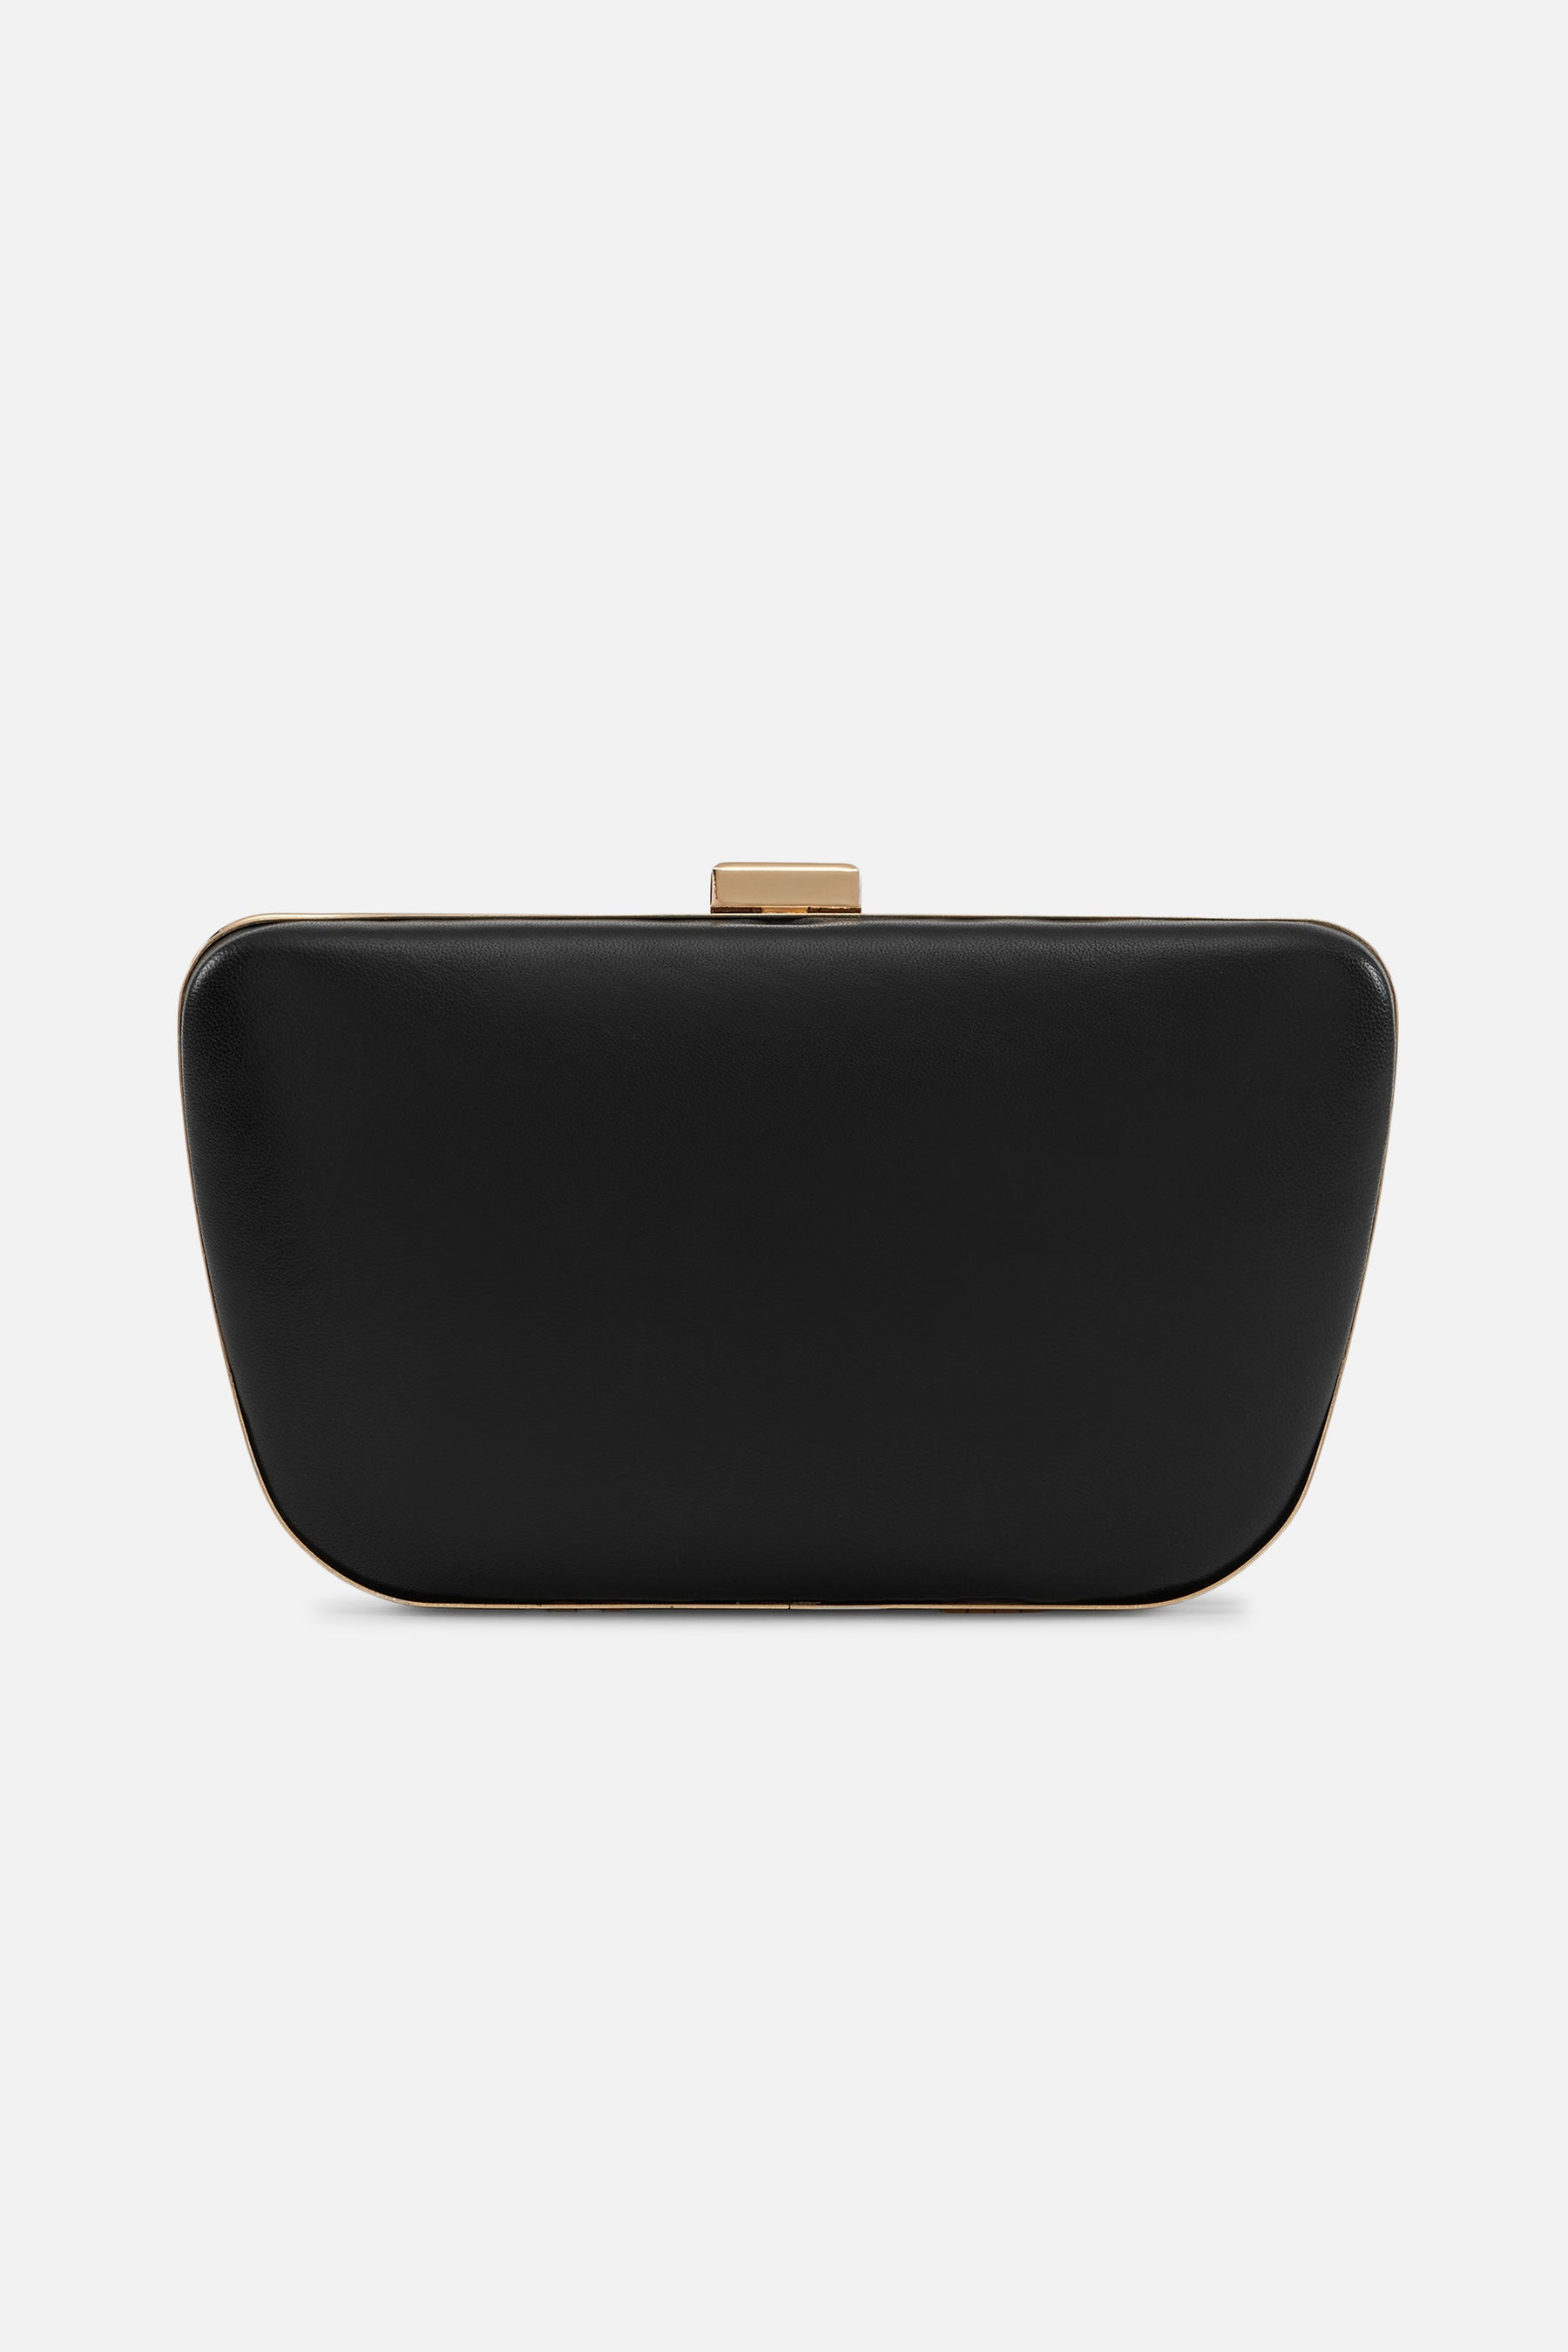 Camila - Leather Box Clutch Bag - Black